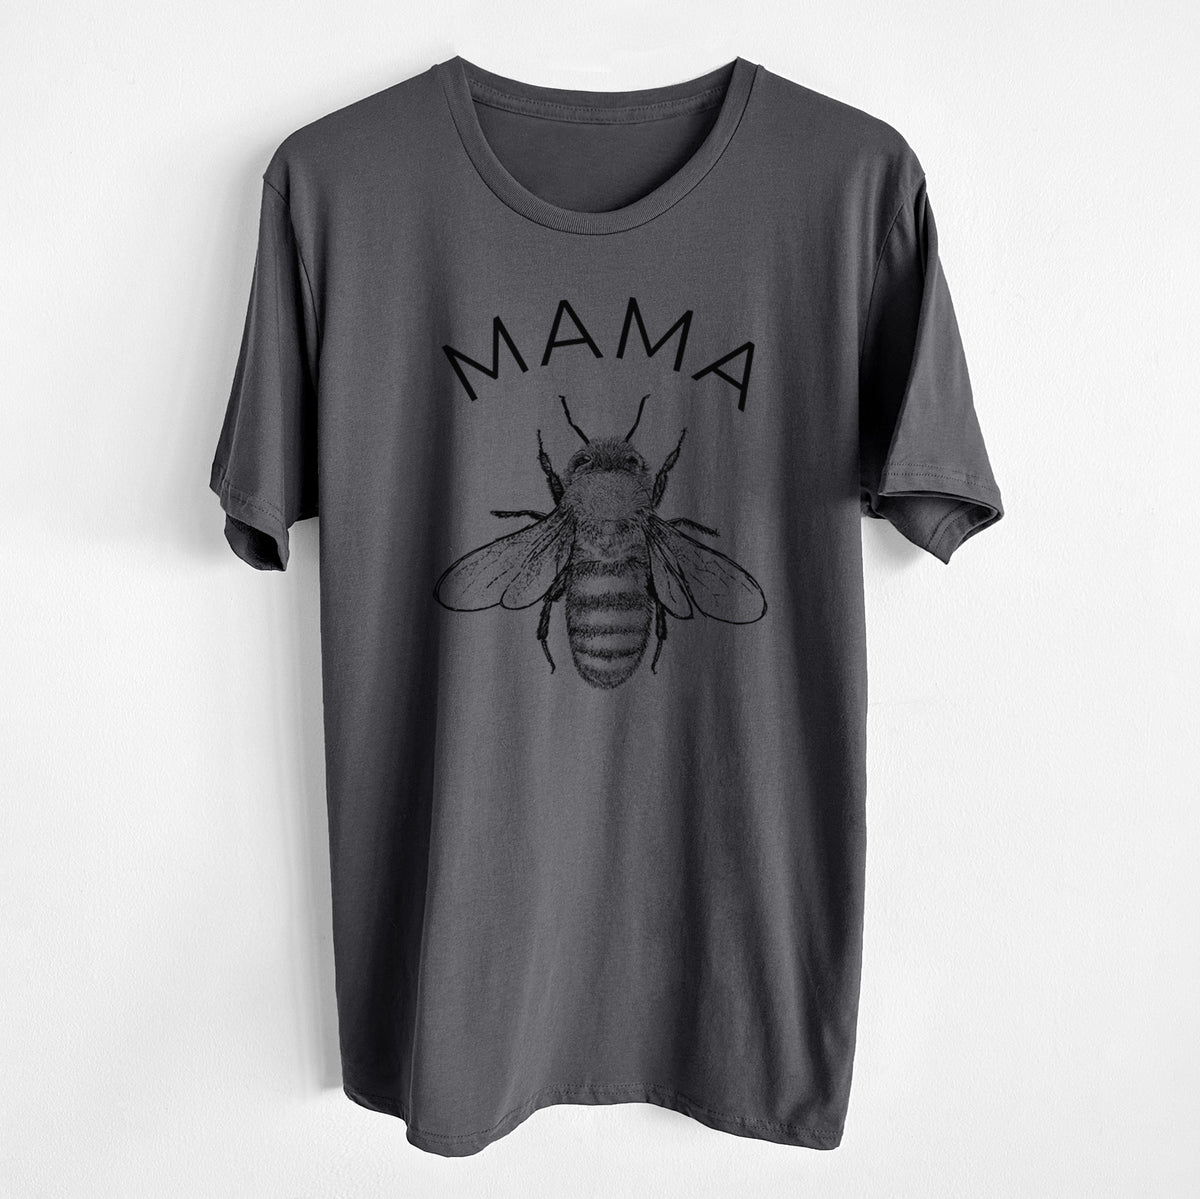 Mama Bee - Unisex Crewneck - Made in USA - 100% Organic Cotton